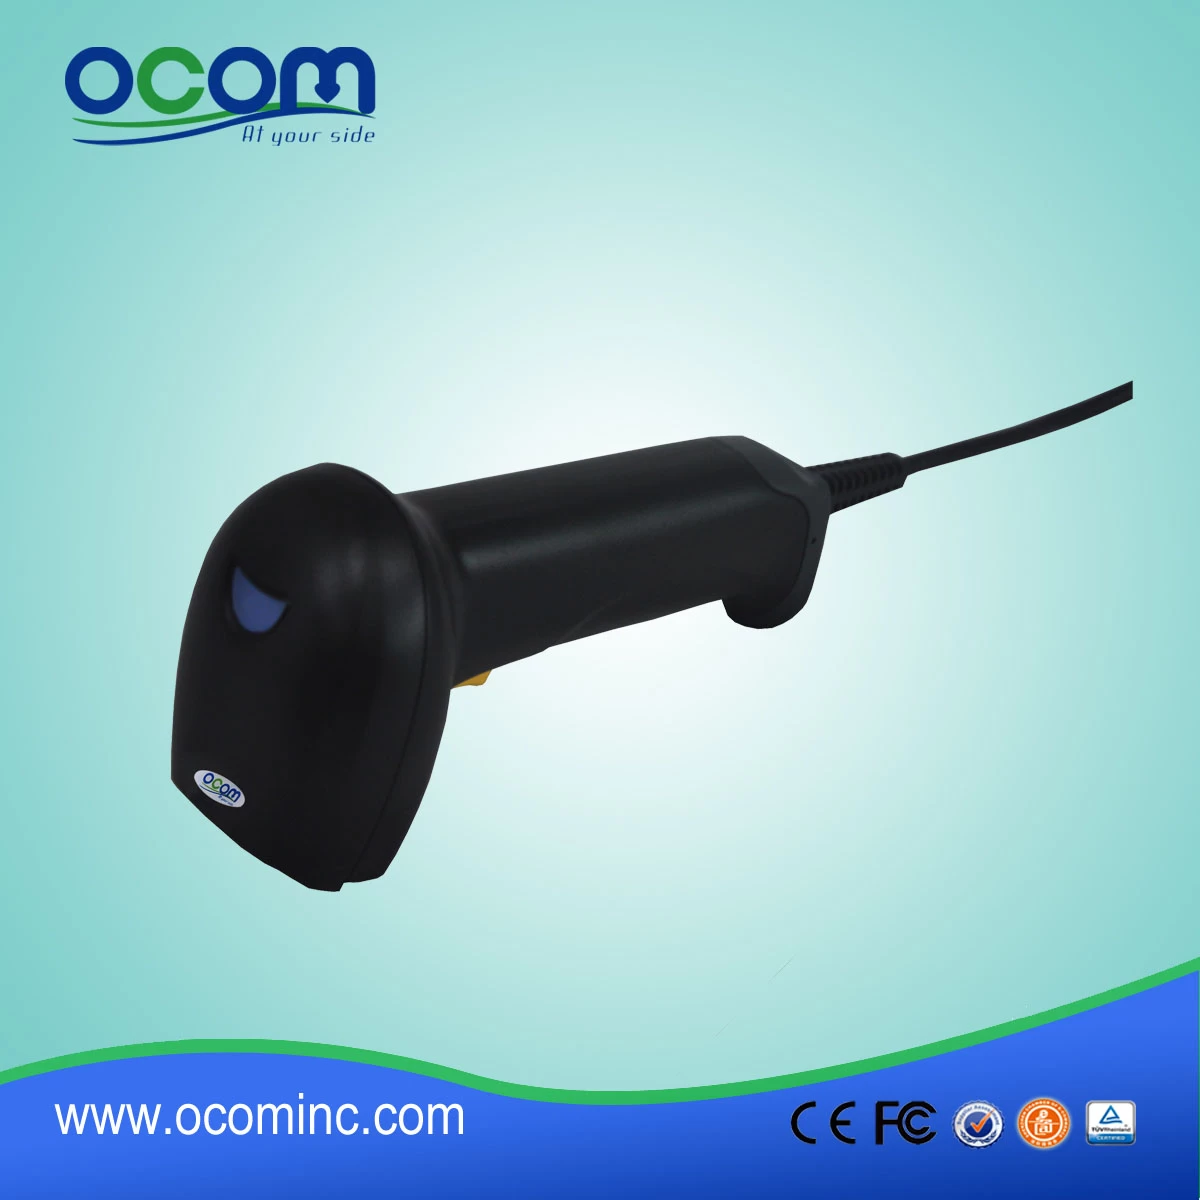 China made Handheld Laser Barcode Scanner-OCBS-L006